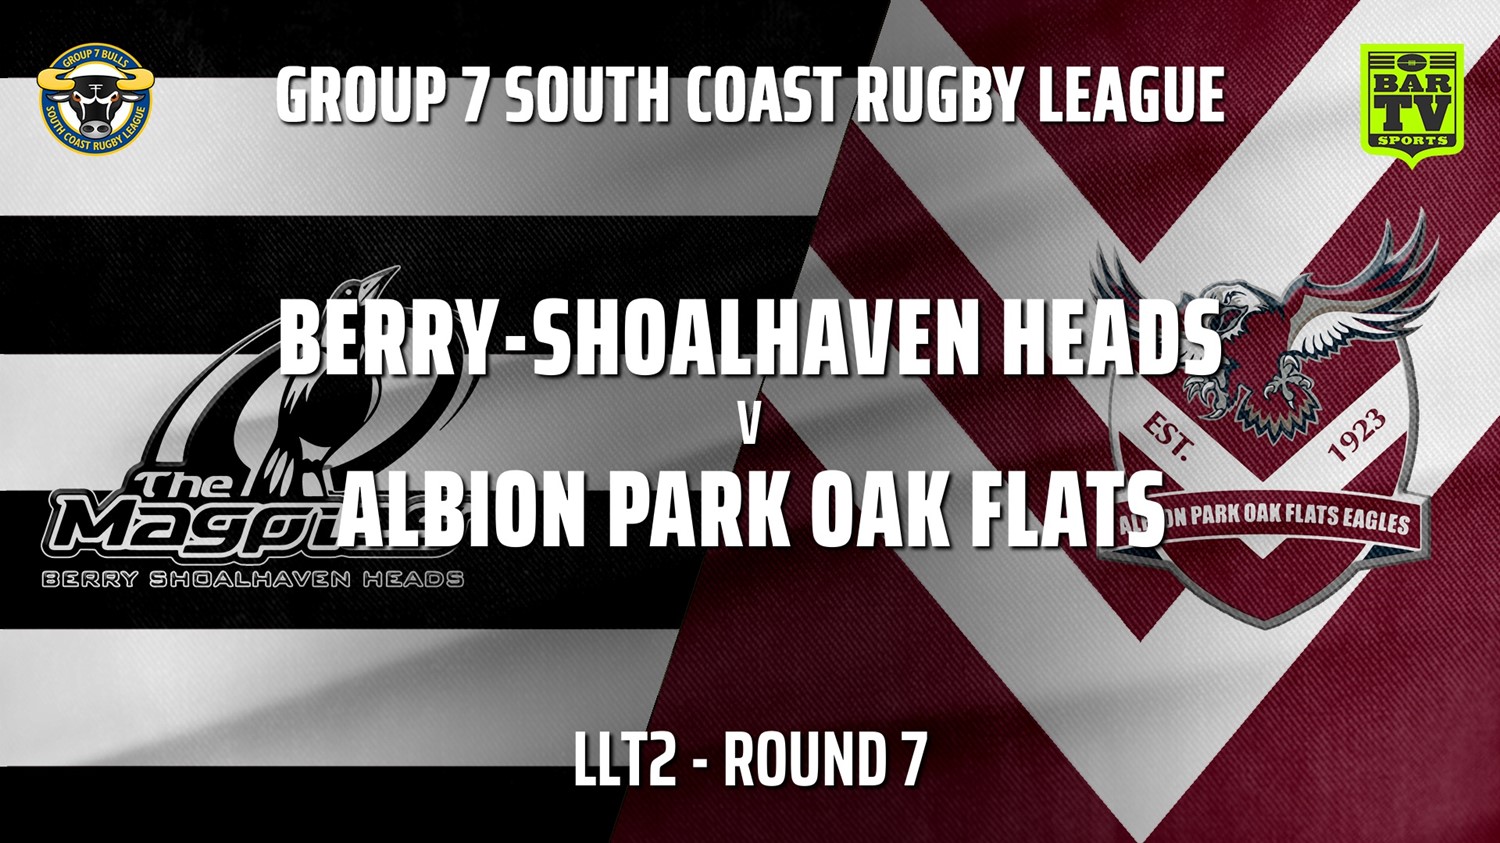 210529-Group 7 RL Round 7 - LLT2 - Berry-Shoalhaven Heads v Albion Park Oak Flats Slate Image